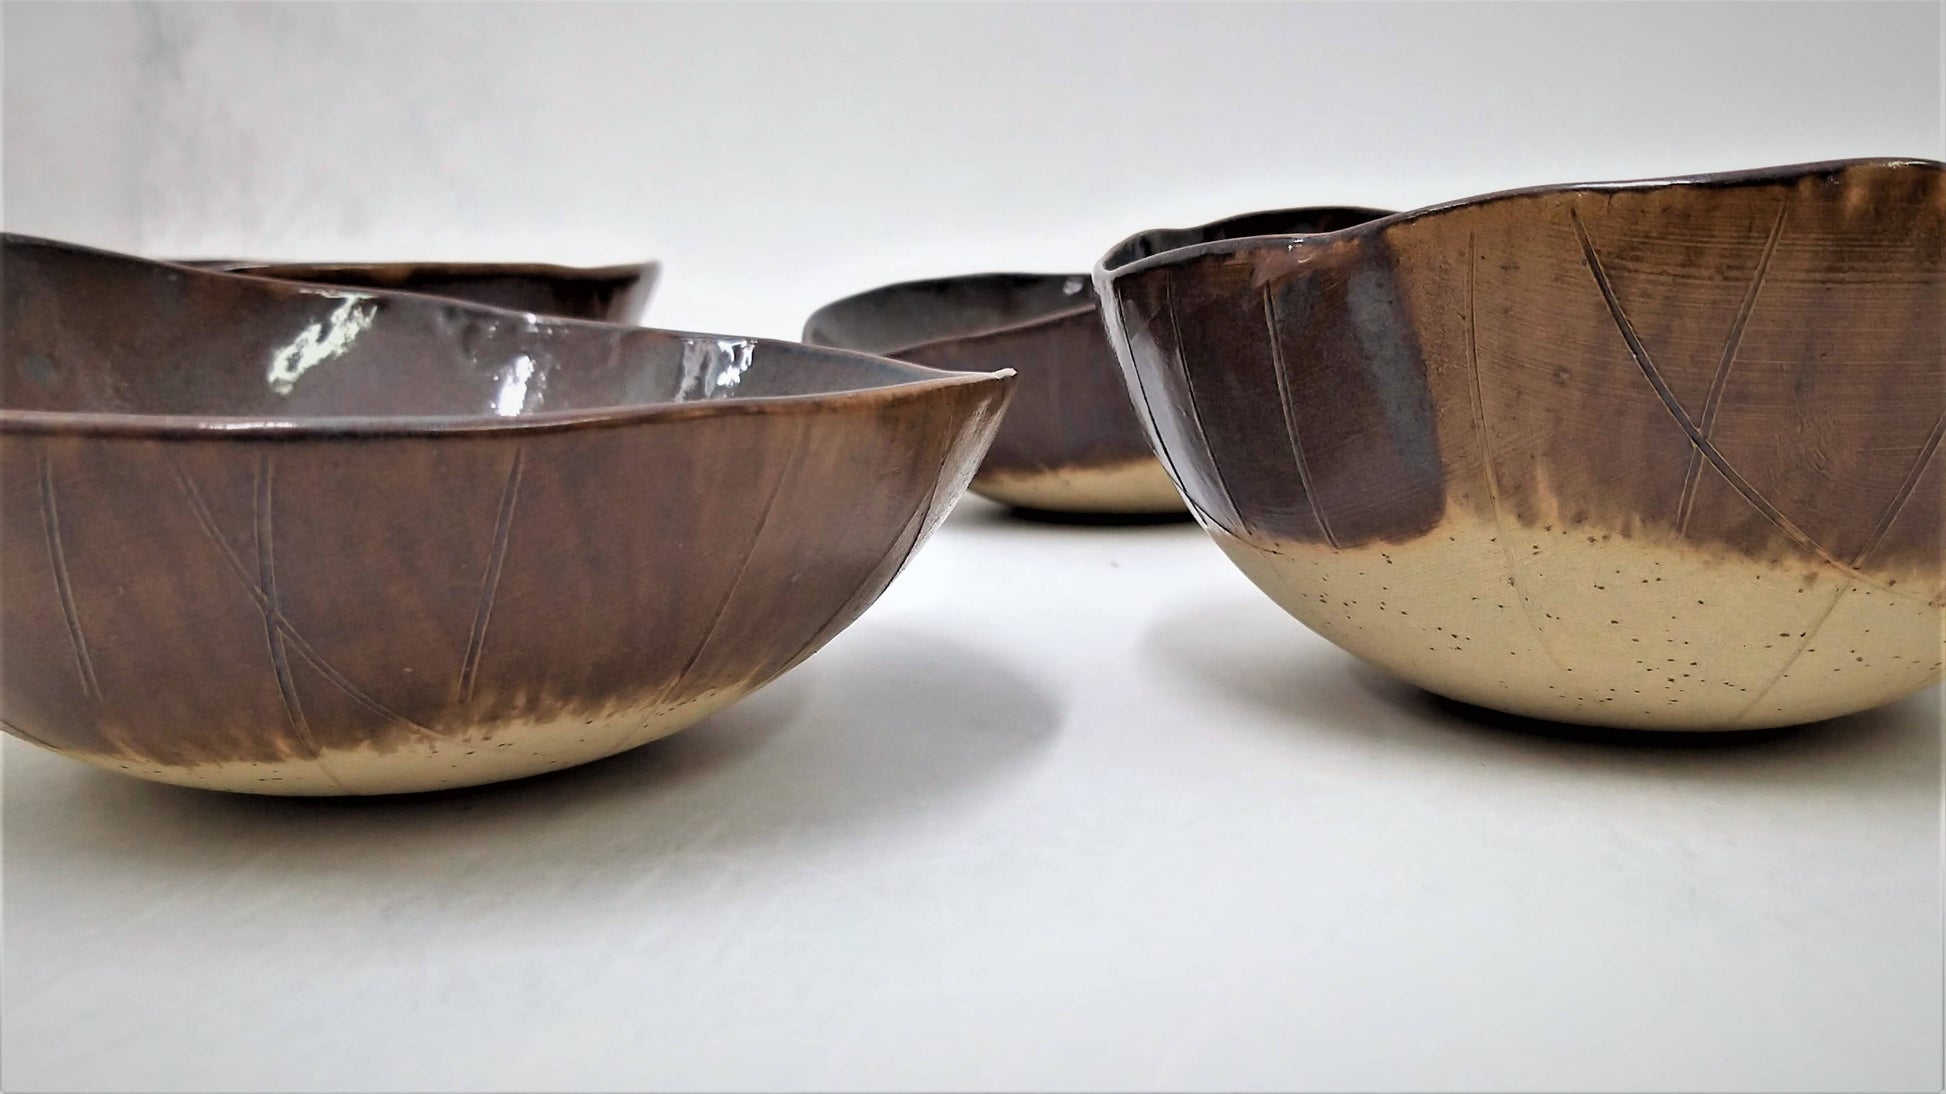 Handcraft ceramic bowls